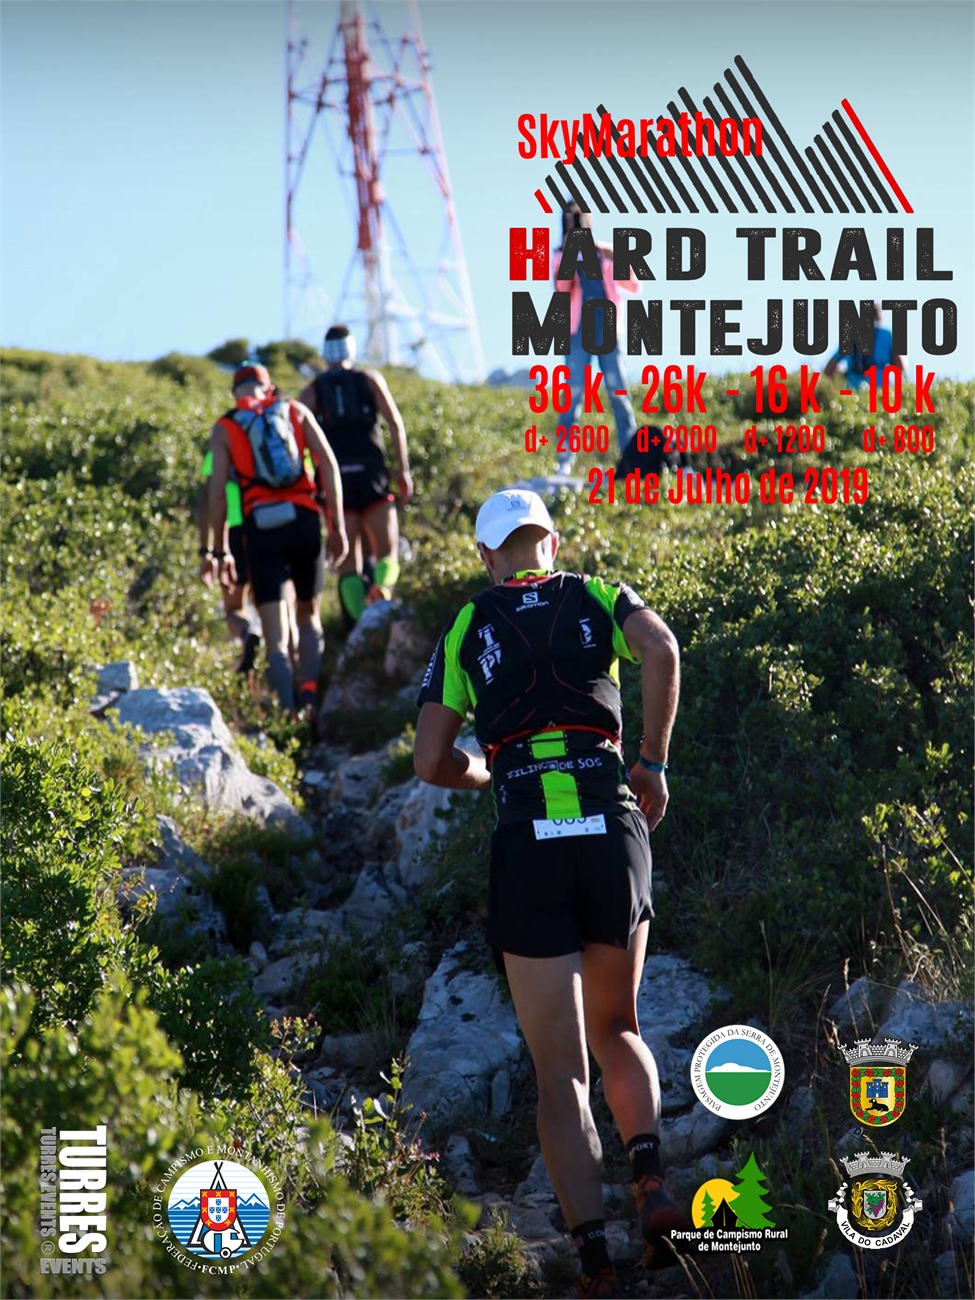 Sky Marathon Montejunto - Hard Trail Montejunto 2019 verão  - Eventos - TurresEvents